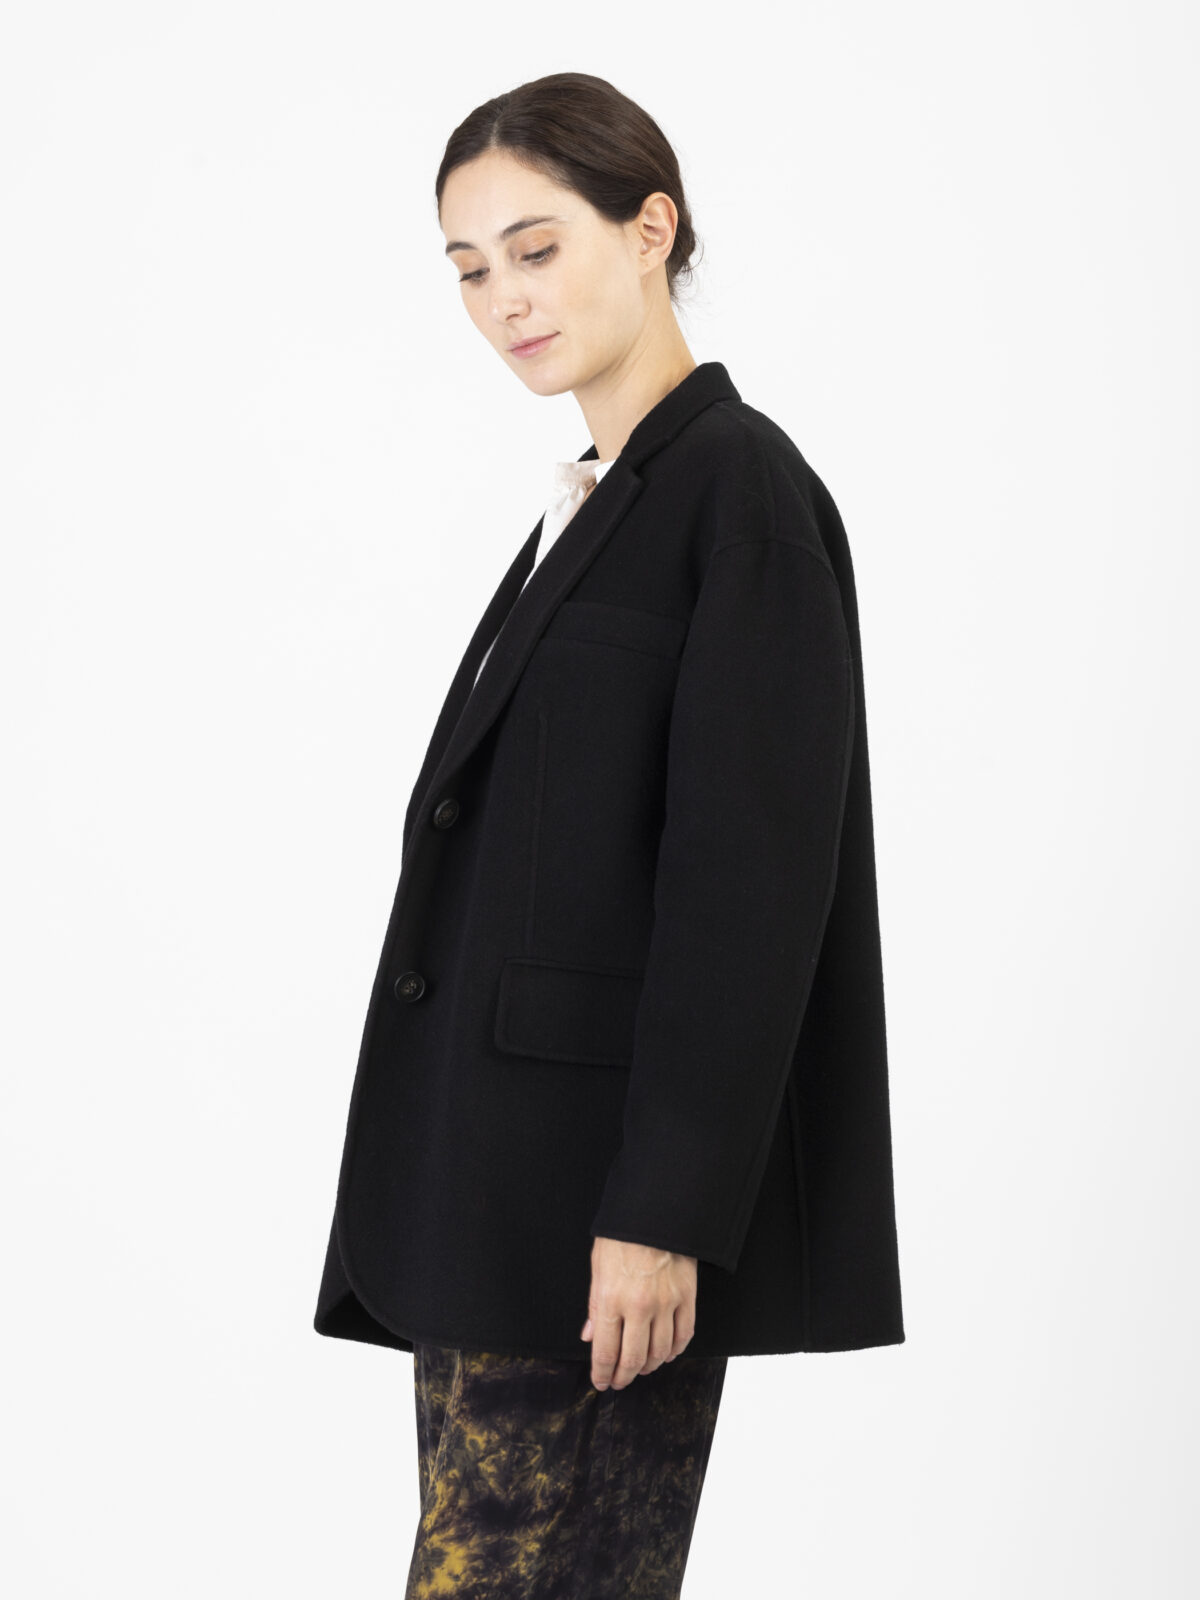 virginia-black-jacket-wool-oversized-vanessa-bruno-matchboxathens